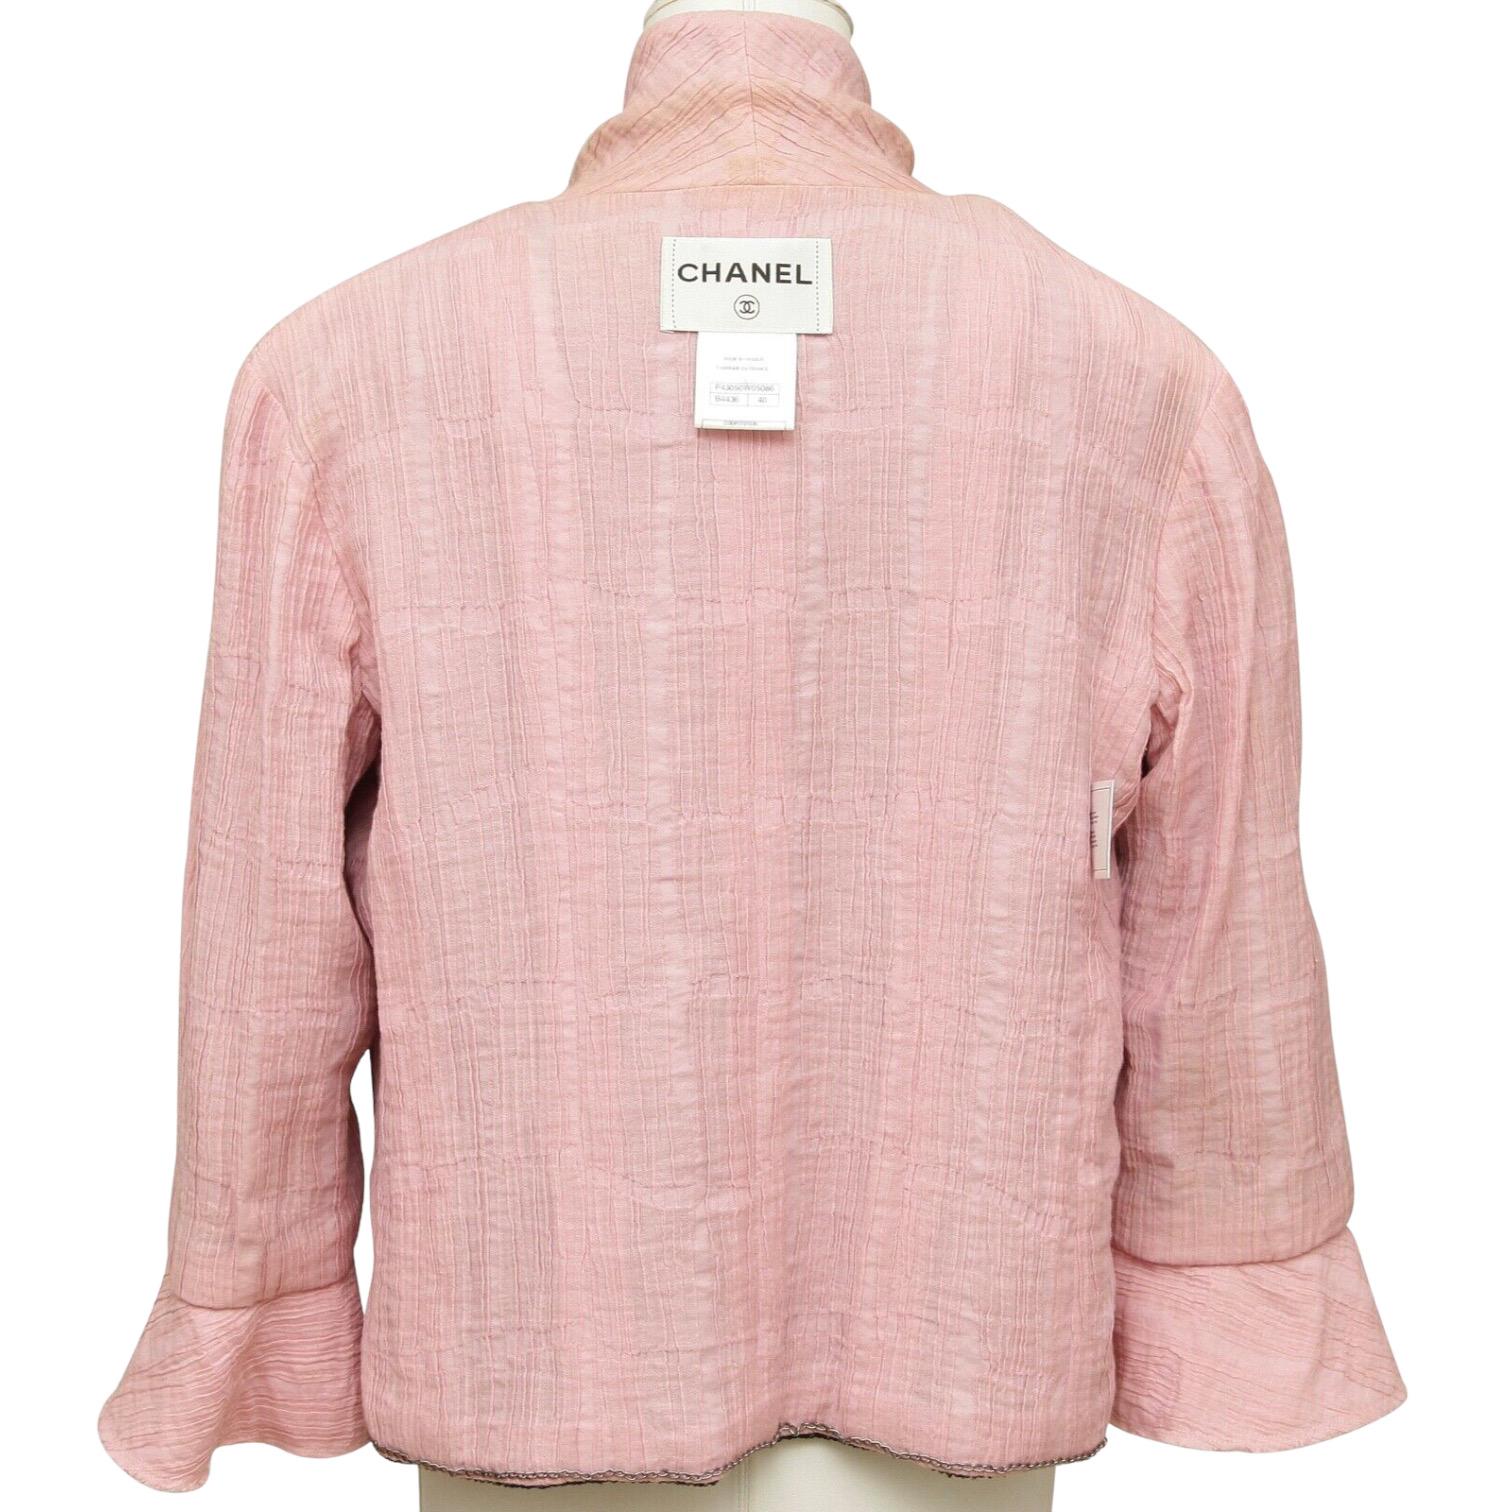 CHANEL Jacket Blazer Coat Tweed Black Iridescent Pink Gripoix Button Sz 40 2012 For Sale 8